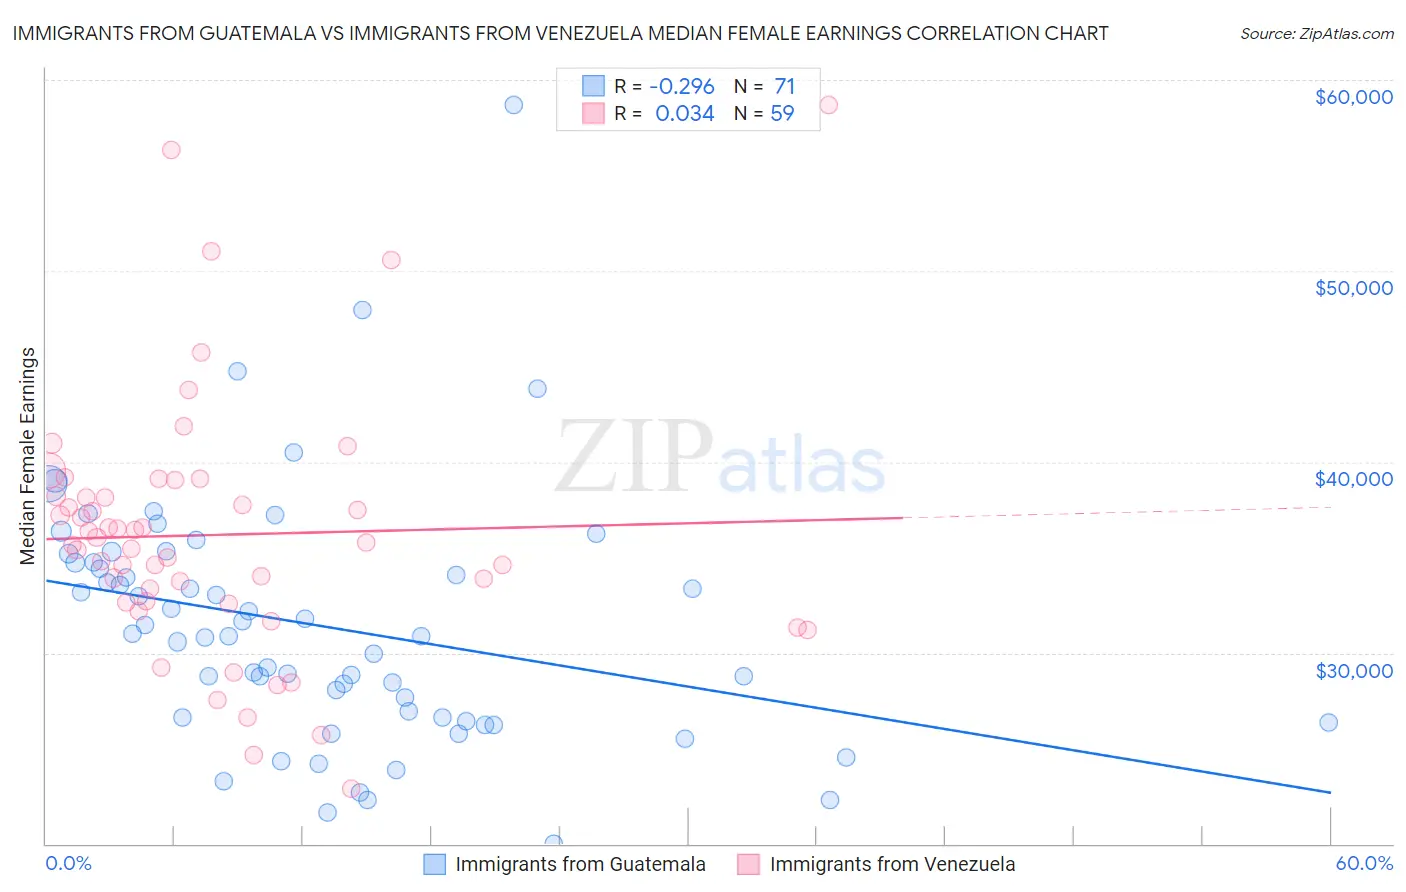 Immigrants from Guatemala vs Immigrants from Venezuela Median Female Earnings